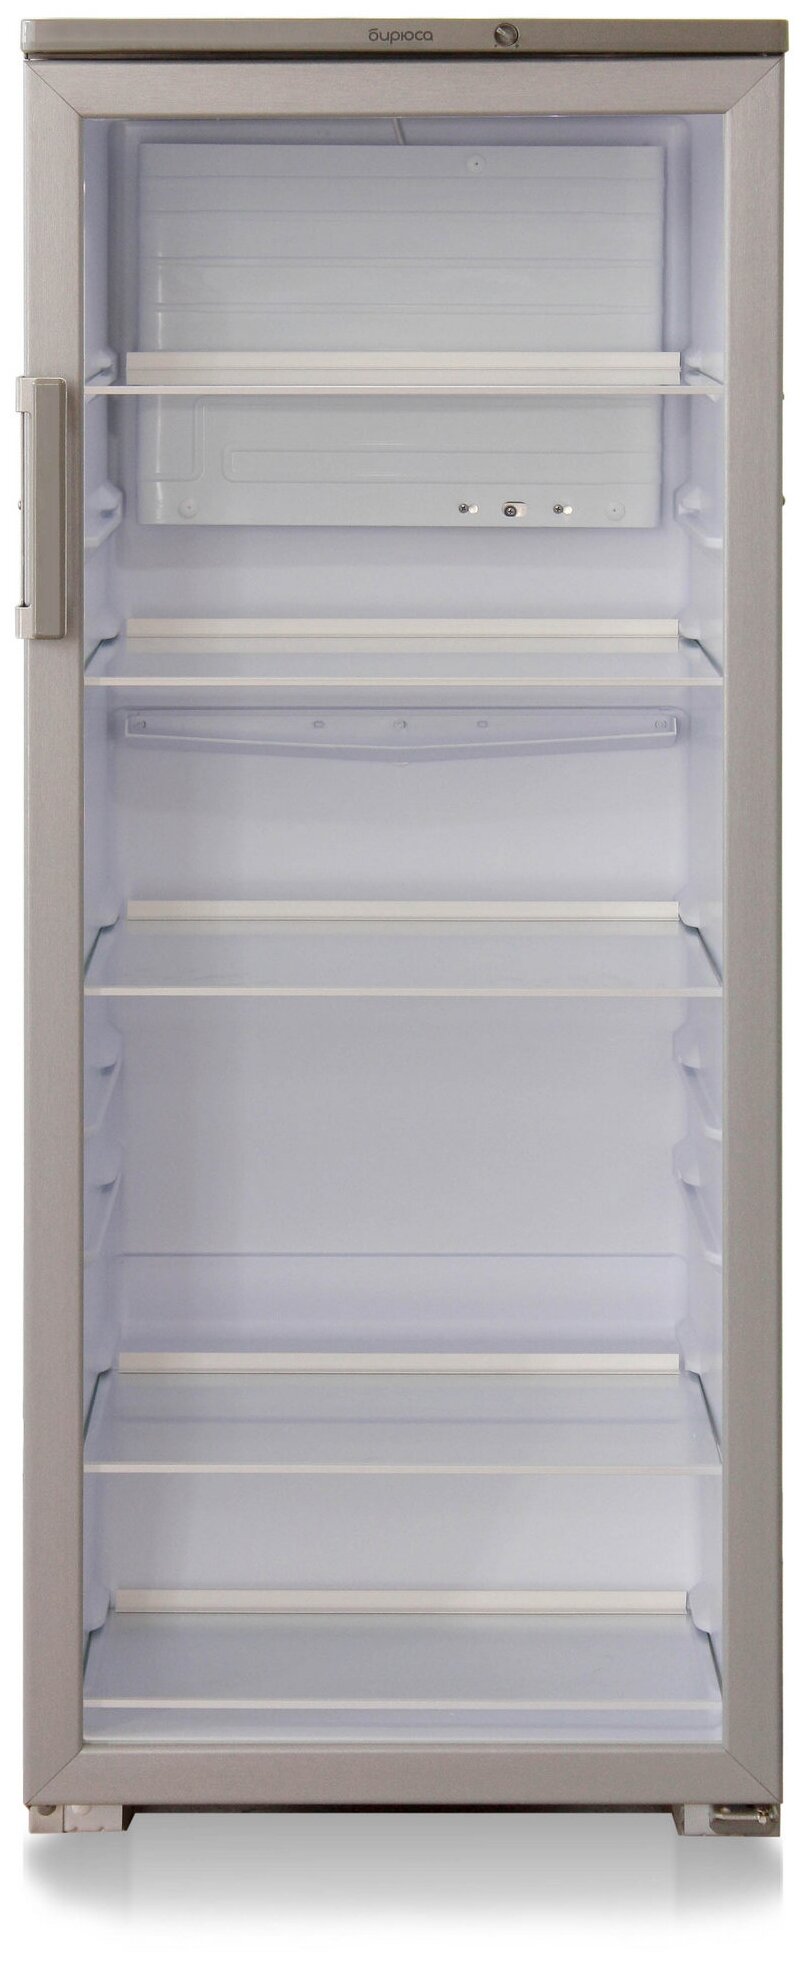 Холодильник Бирюса M290